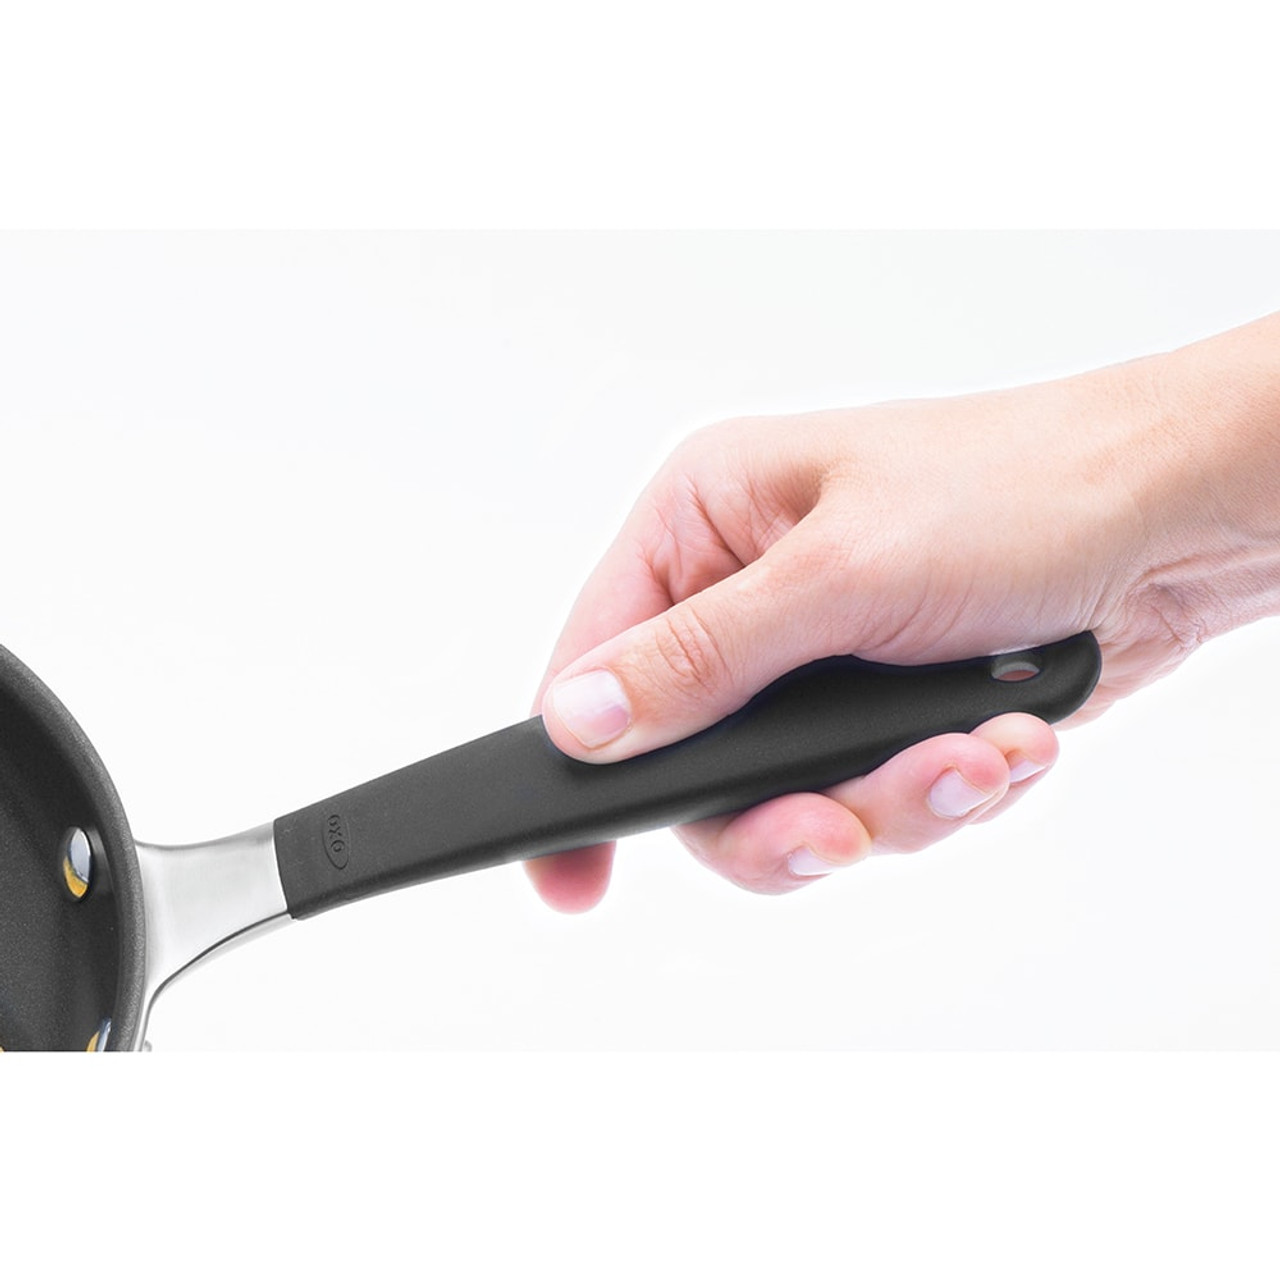 OXO Good Grips Non-Stick Pro 8-Inch Open Frypan